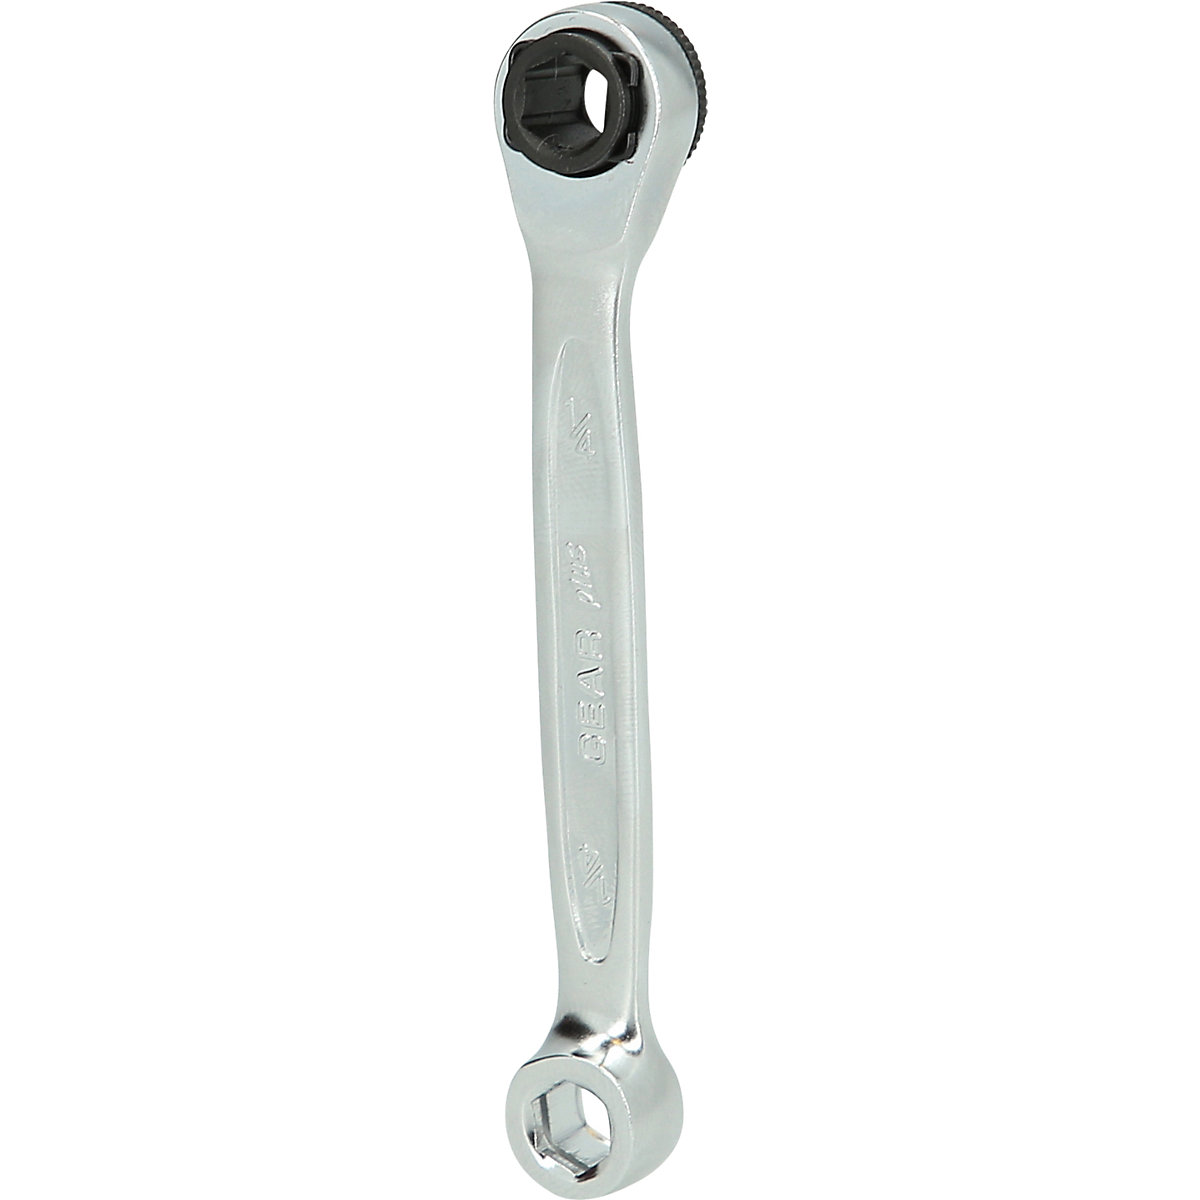 GEARplus mini bit reversible ratchet ring spanner – KS Tools